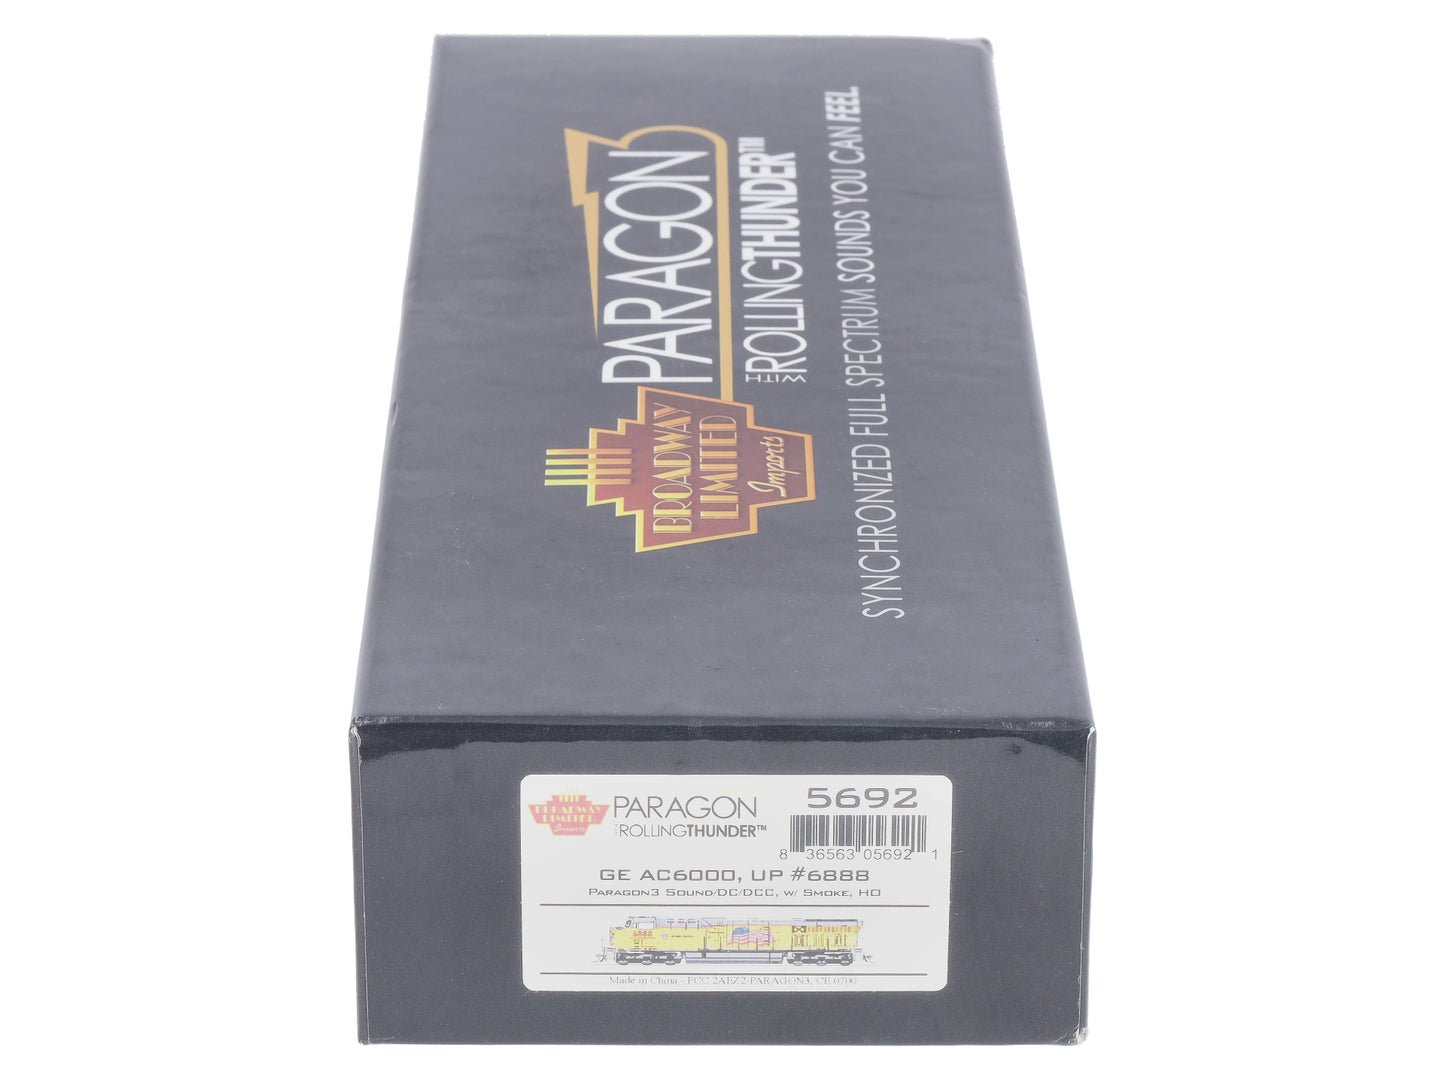  Imperator Black 200 Filtered Cigarette Tubes 1 Box of 200 Tubes  : Health & Household